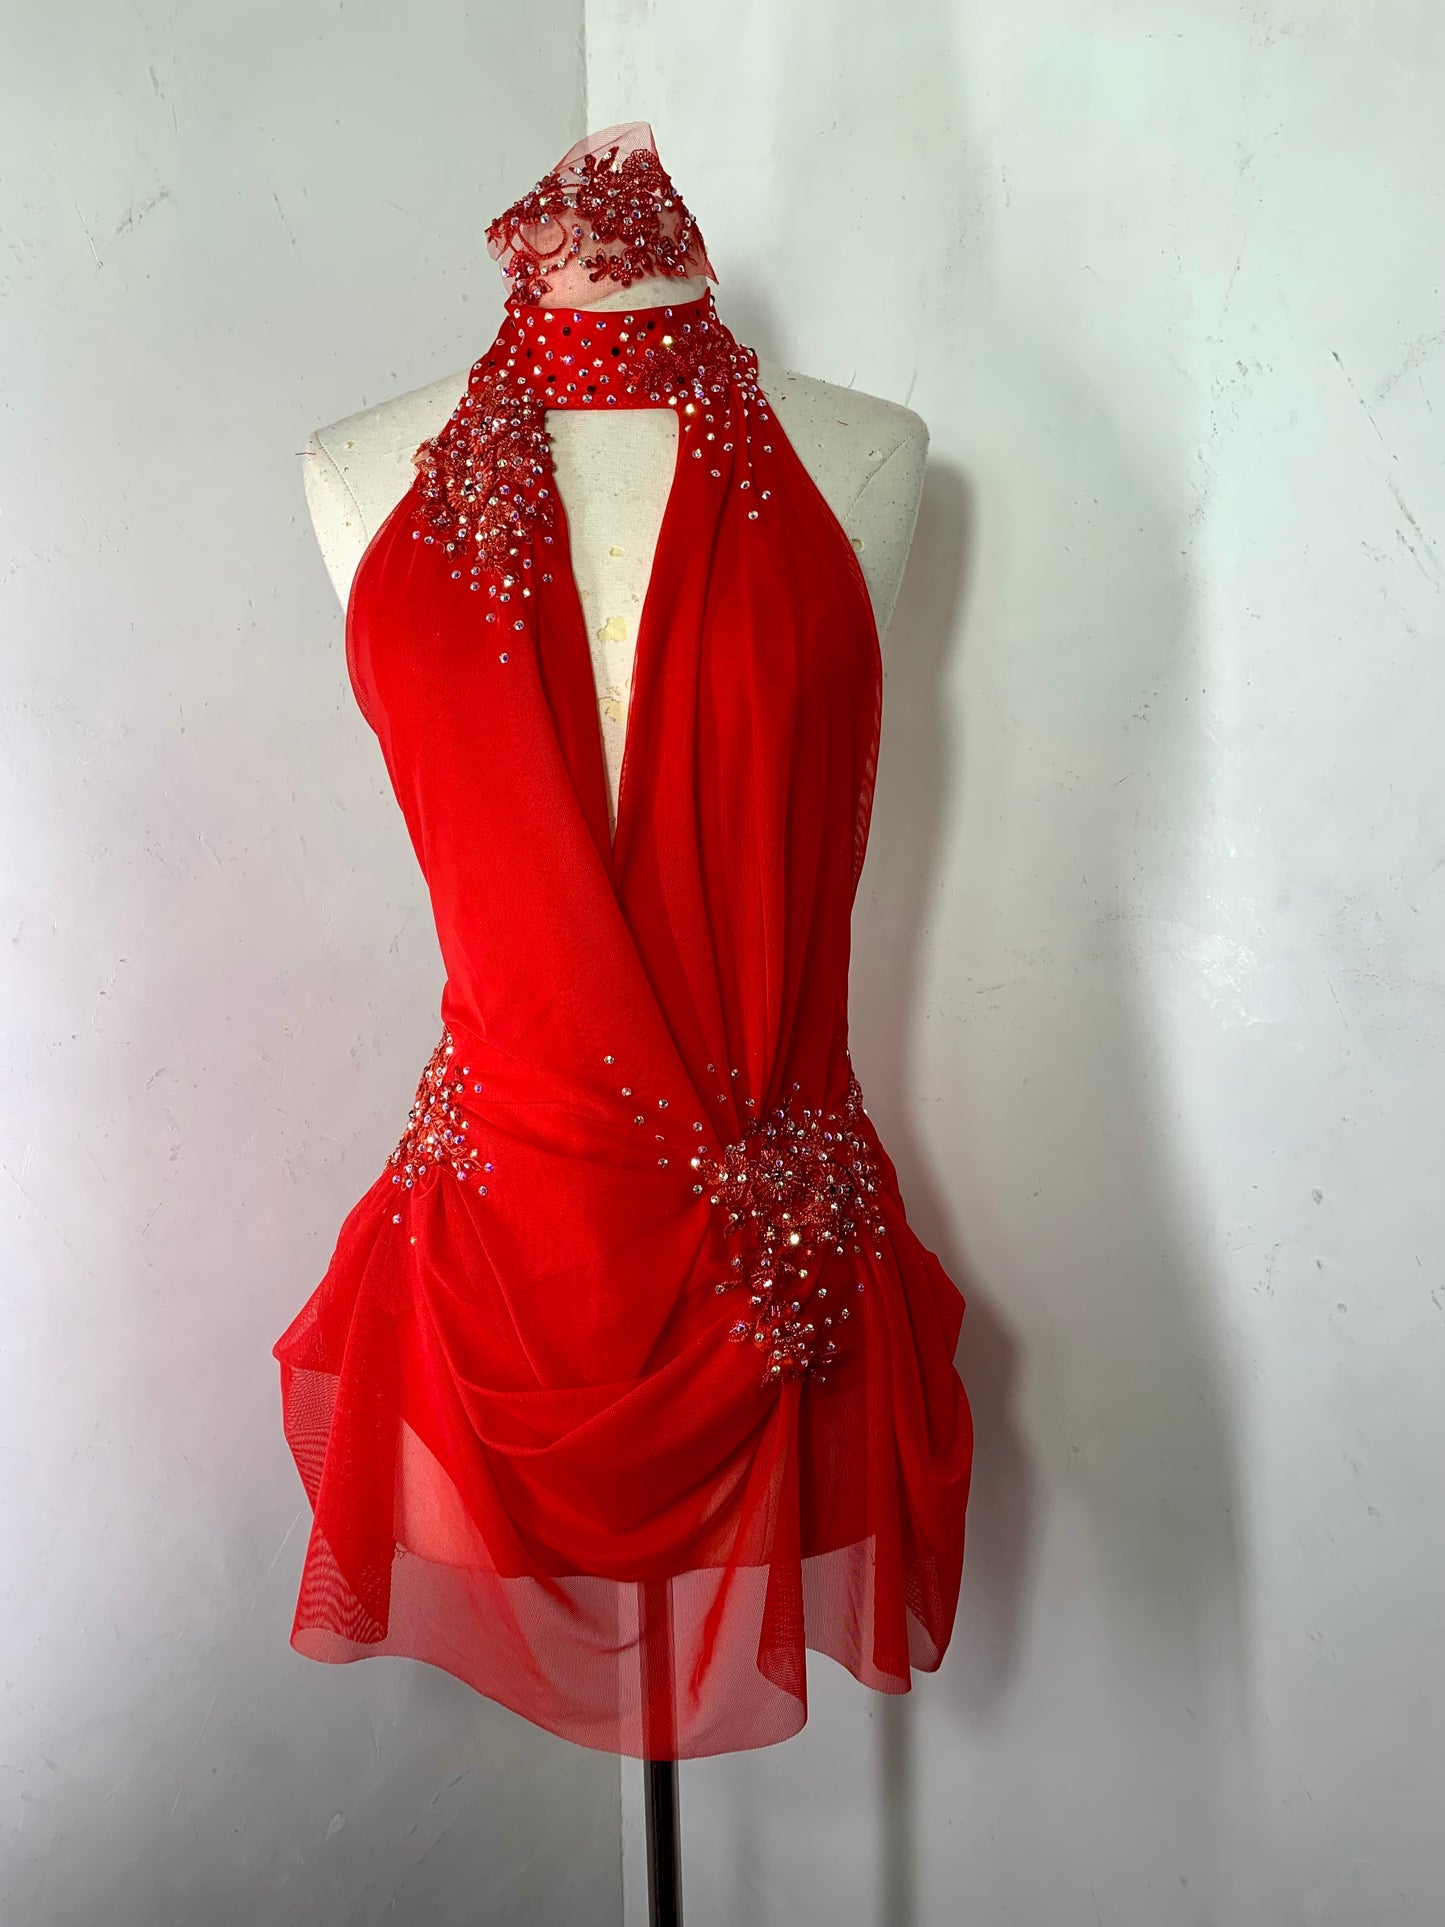 Draped red dance dress